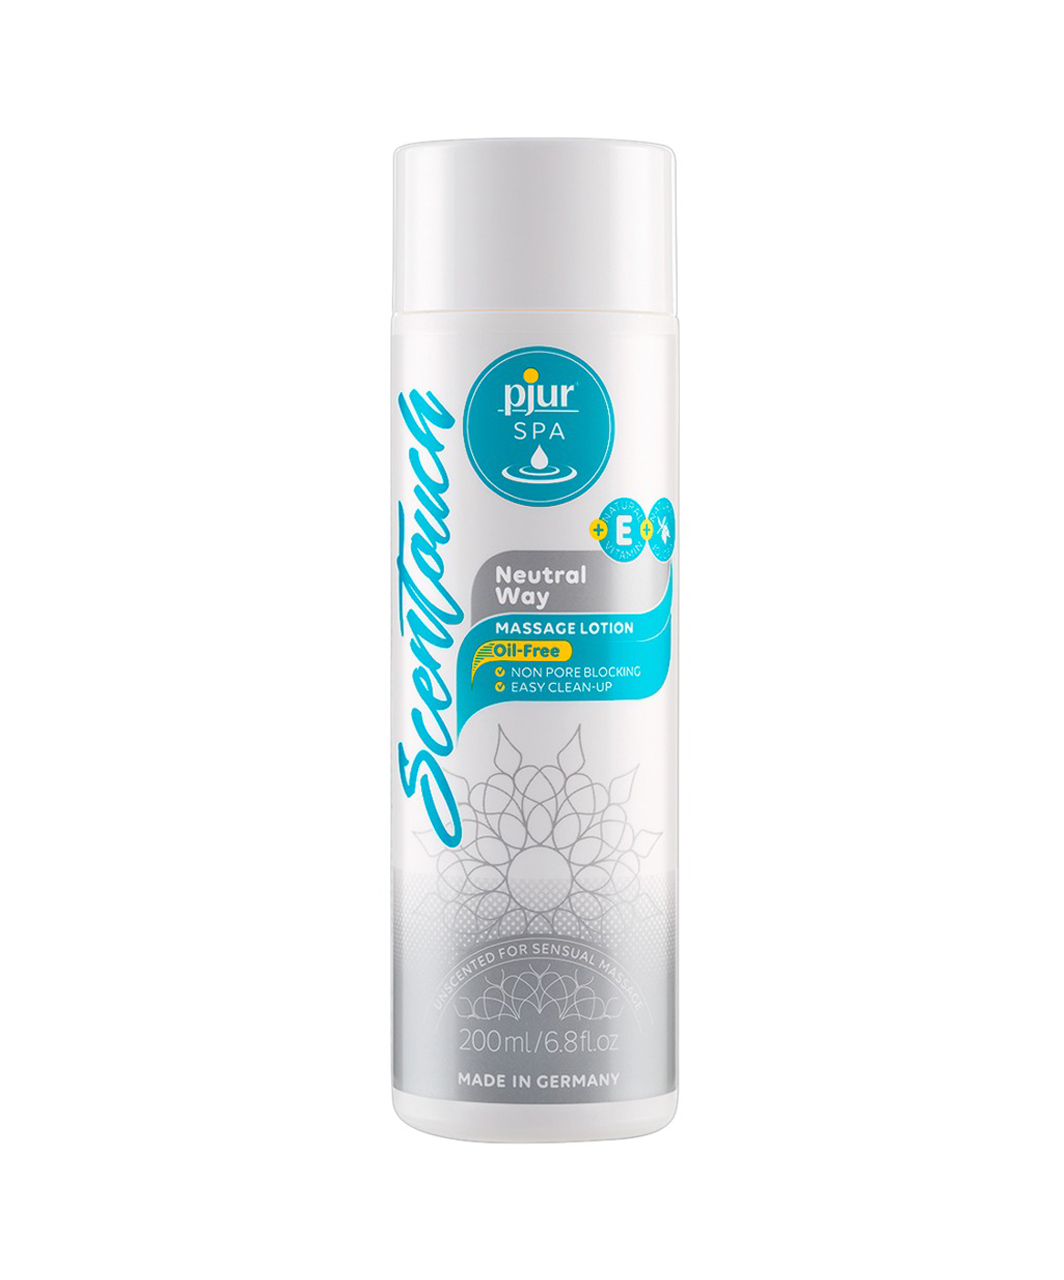 pjur SPA ScenTouch massage lotion (200 ml)